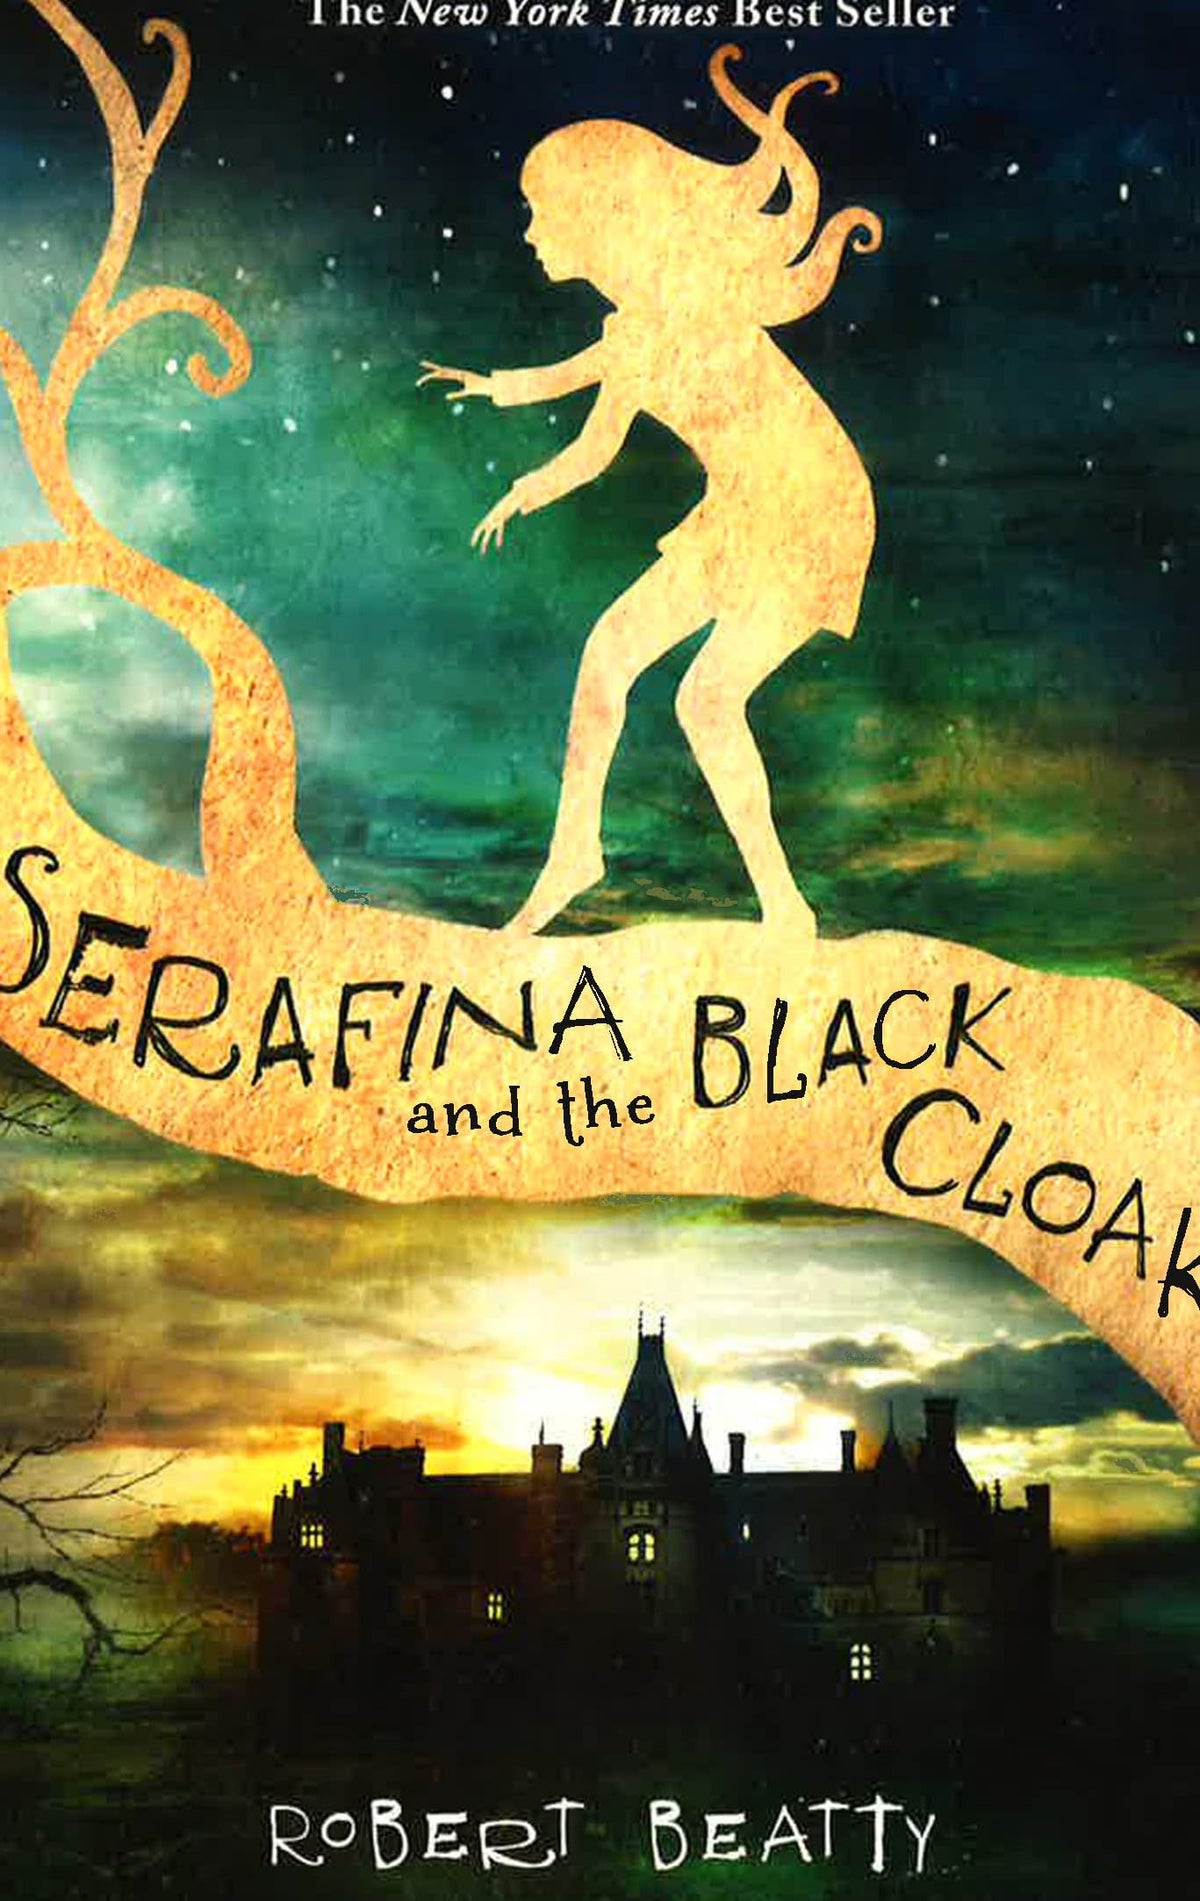 serafina and the black cloak full book